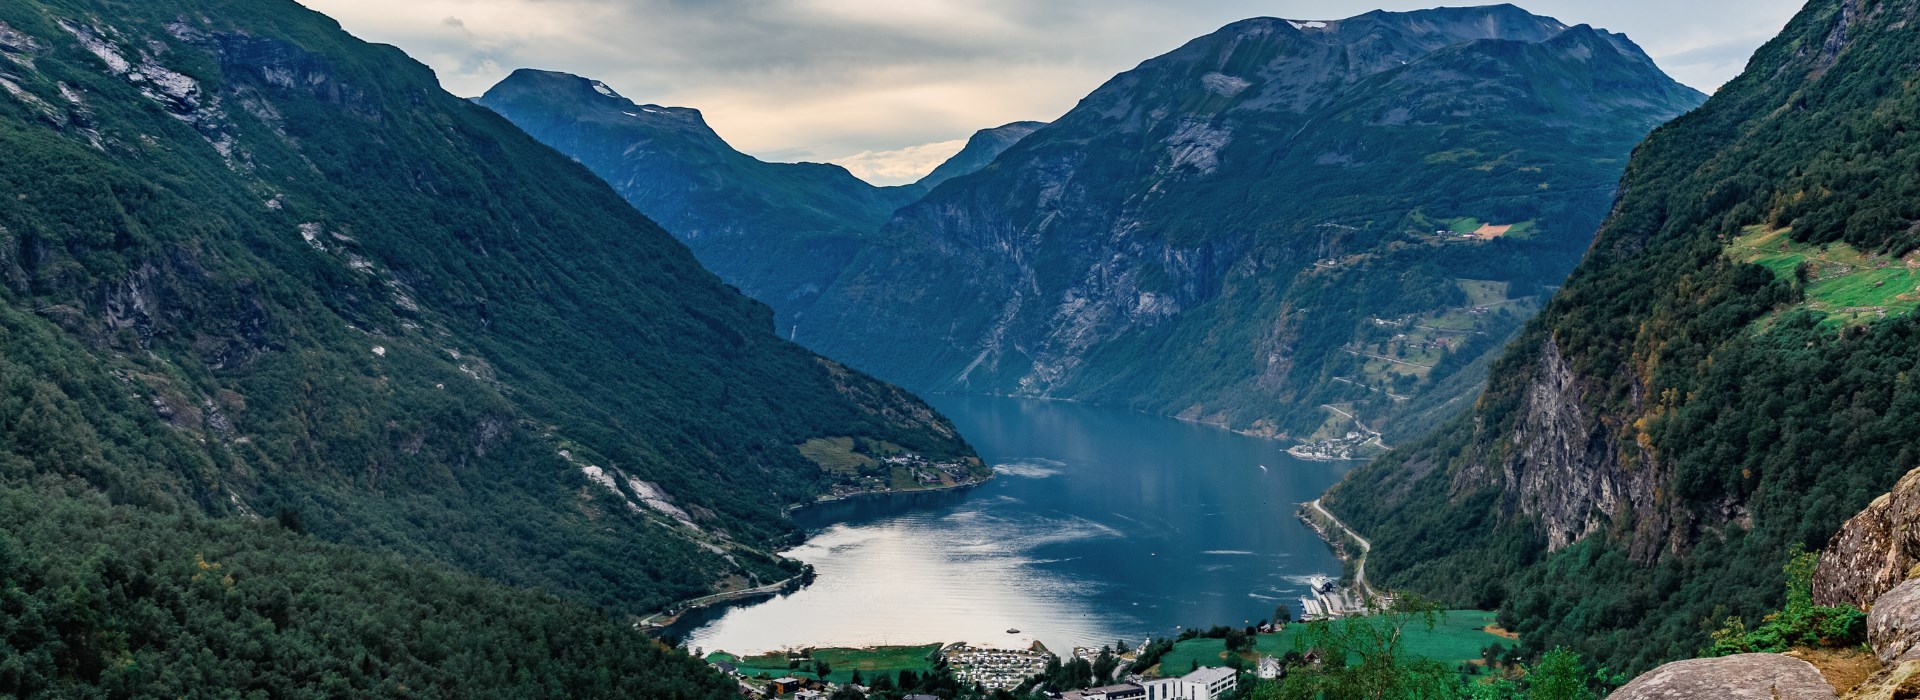 Visiter La vallée des Cygnes - Norvège